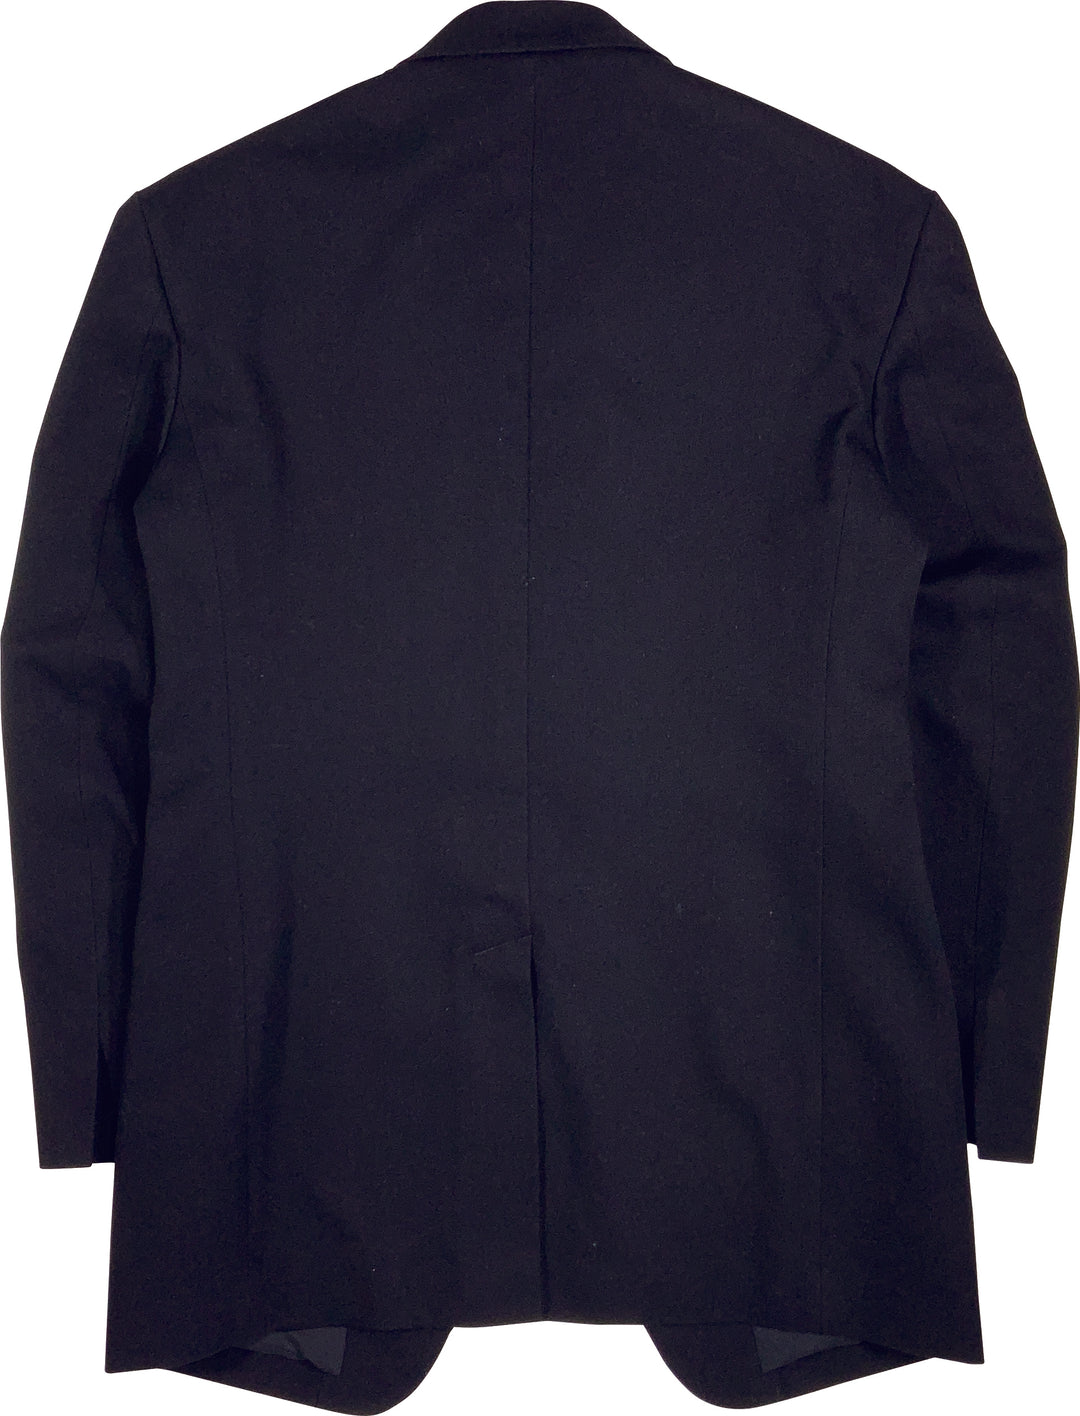 Double Tailored Jacket - Black